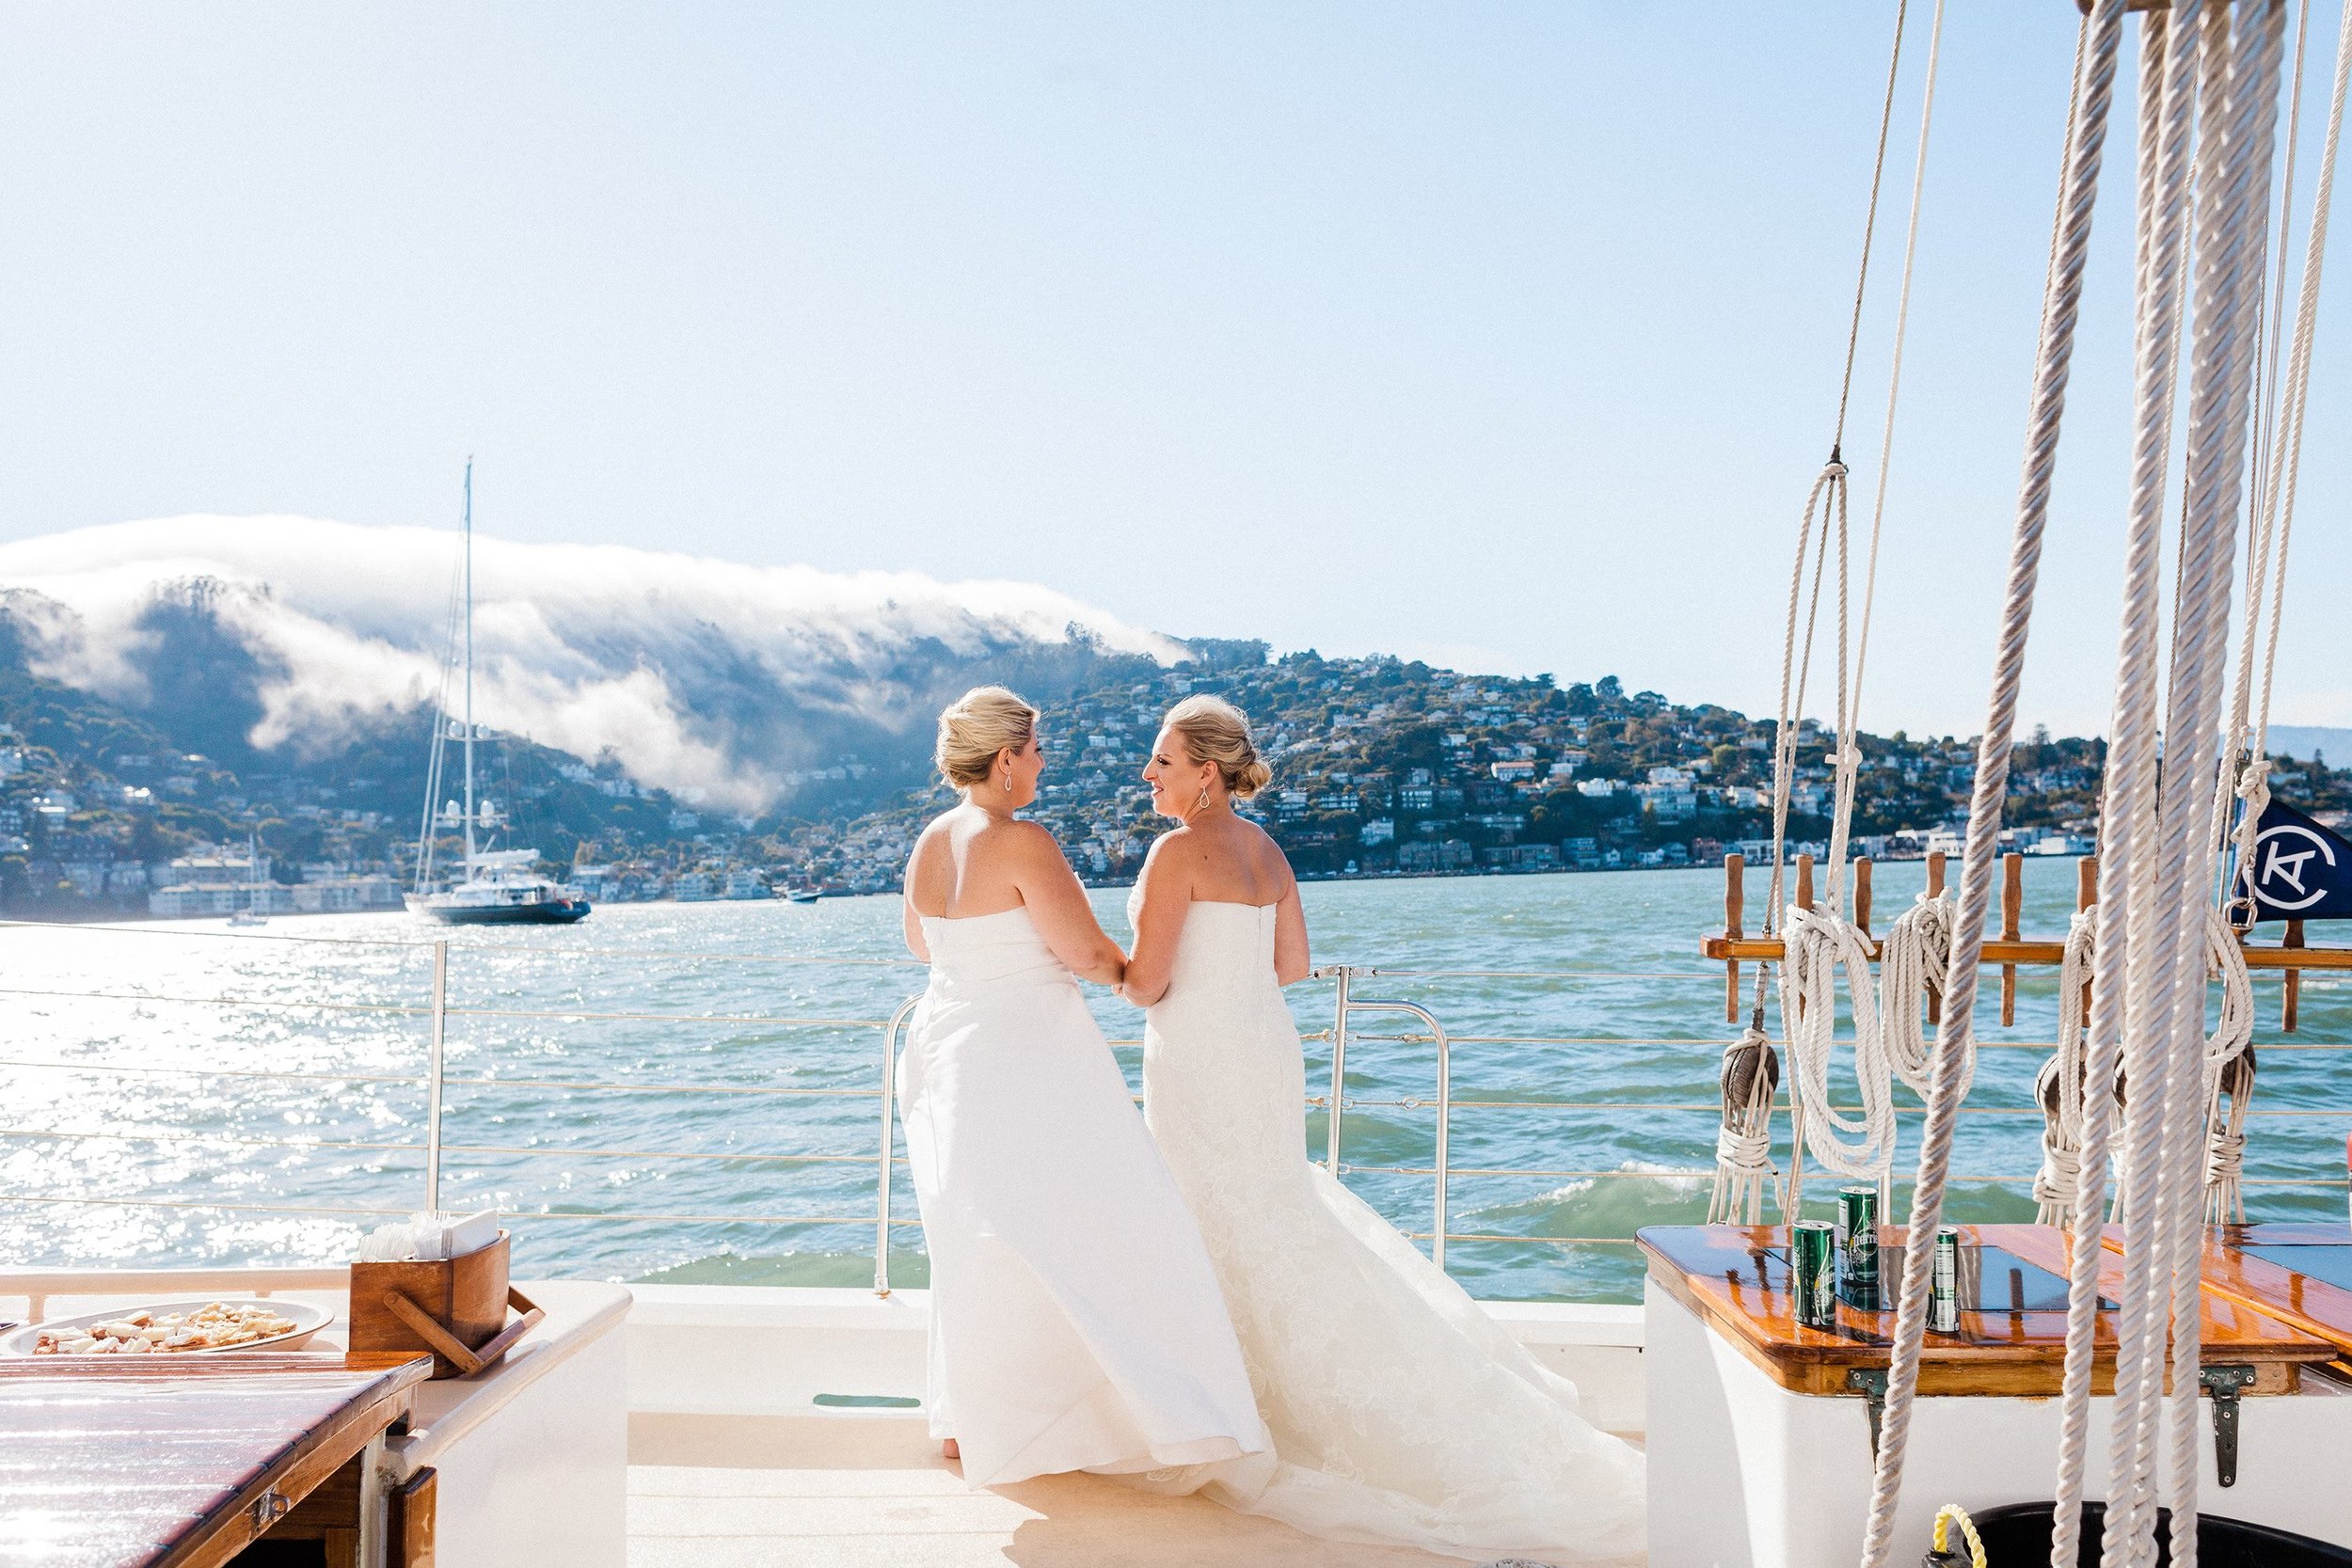 092218_AK_Sausalito-Yacht-Club-Wedding_Buena-Lane-Photography_224.jpg